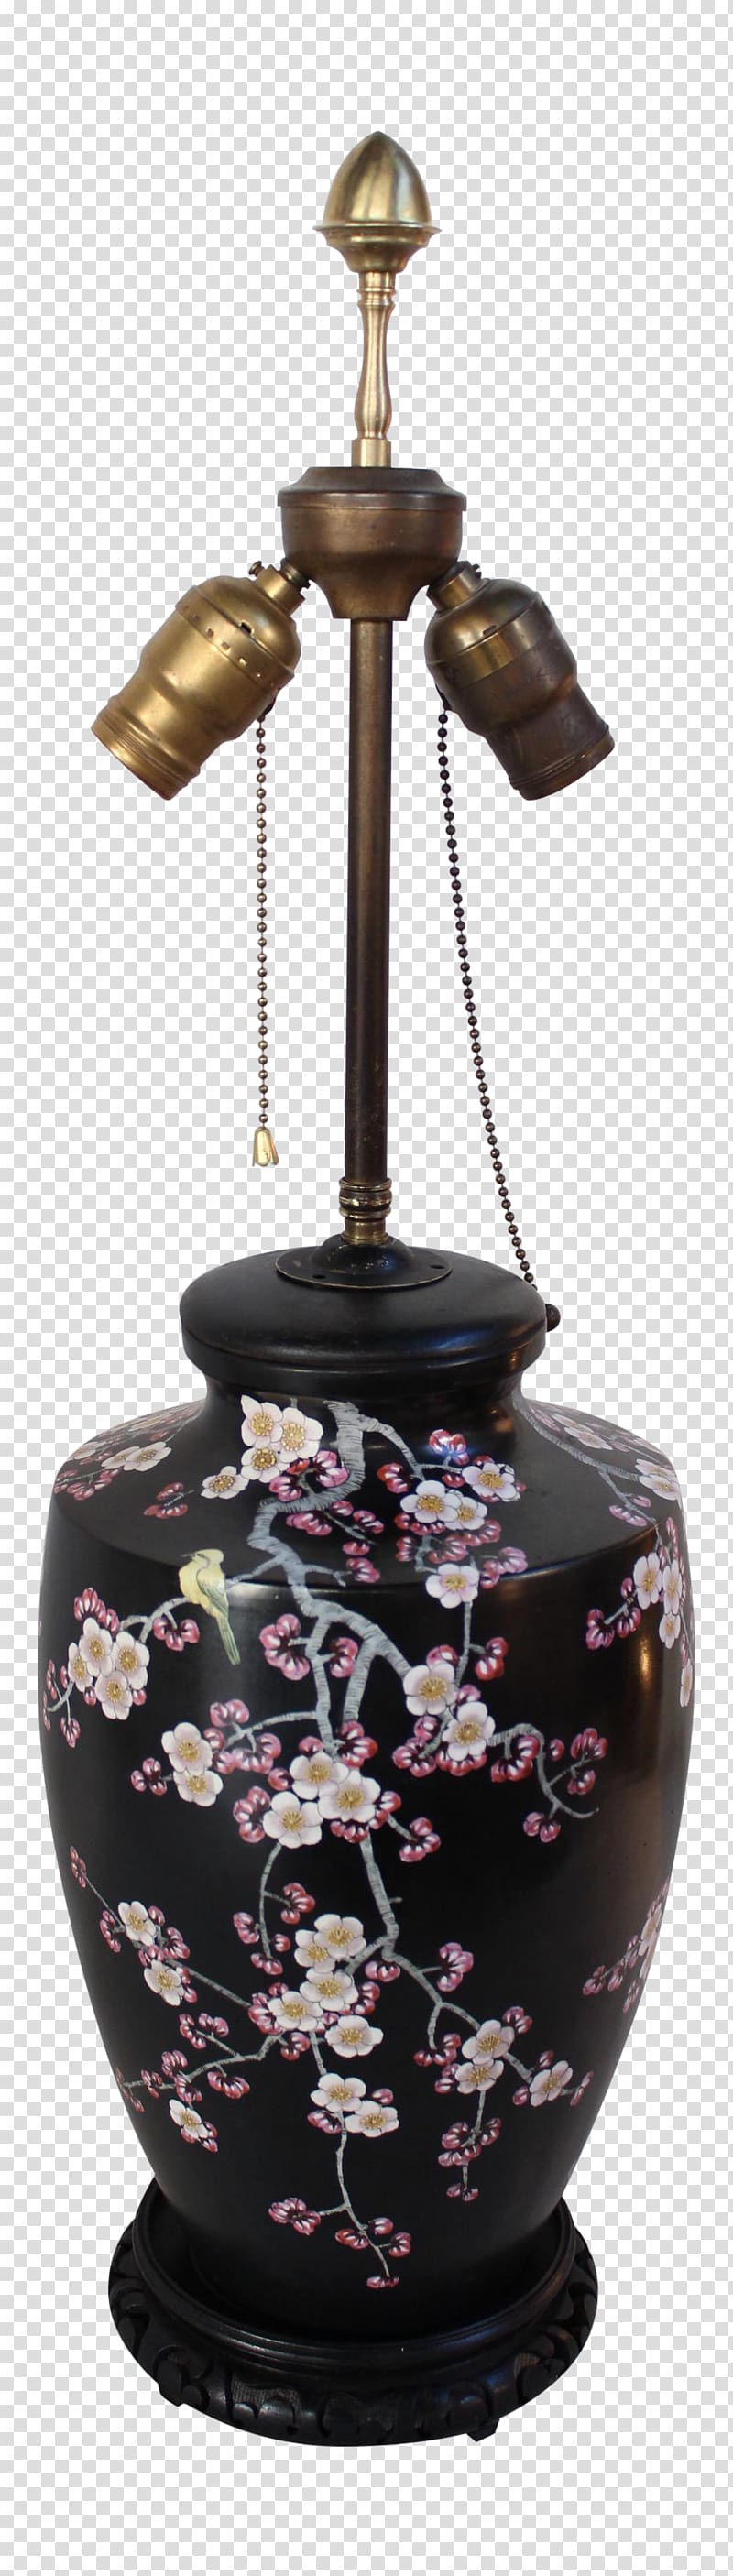 Vase Japan Cherry blossom 20th century, vase transparent background PNG clipart